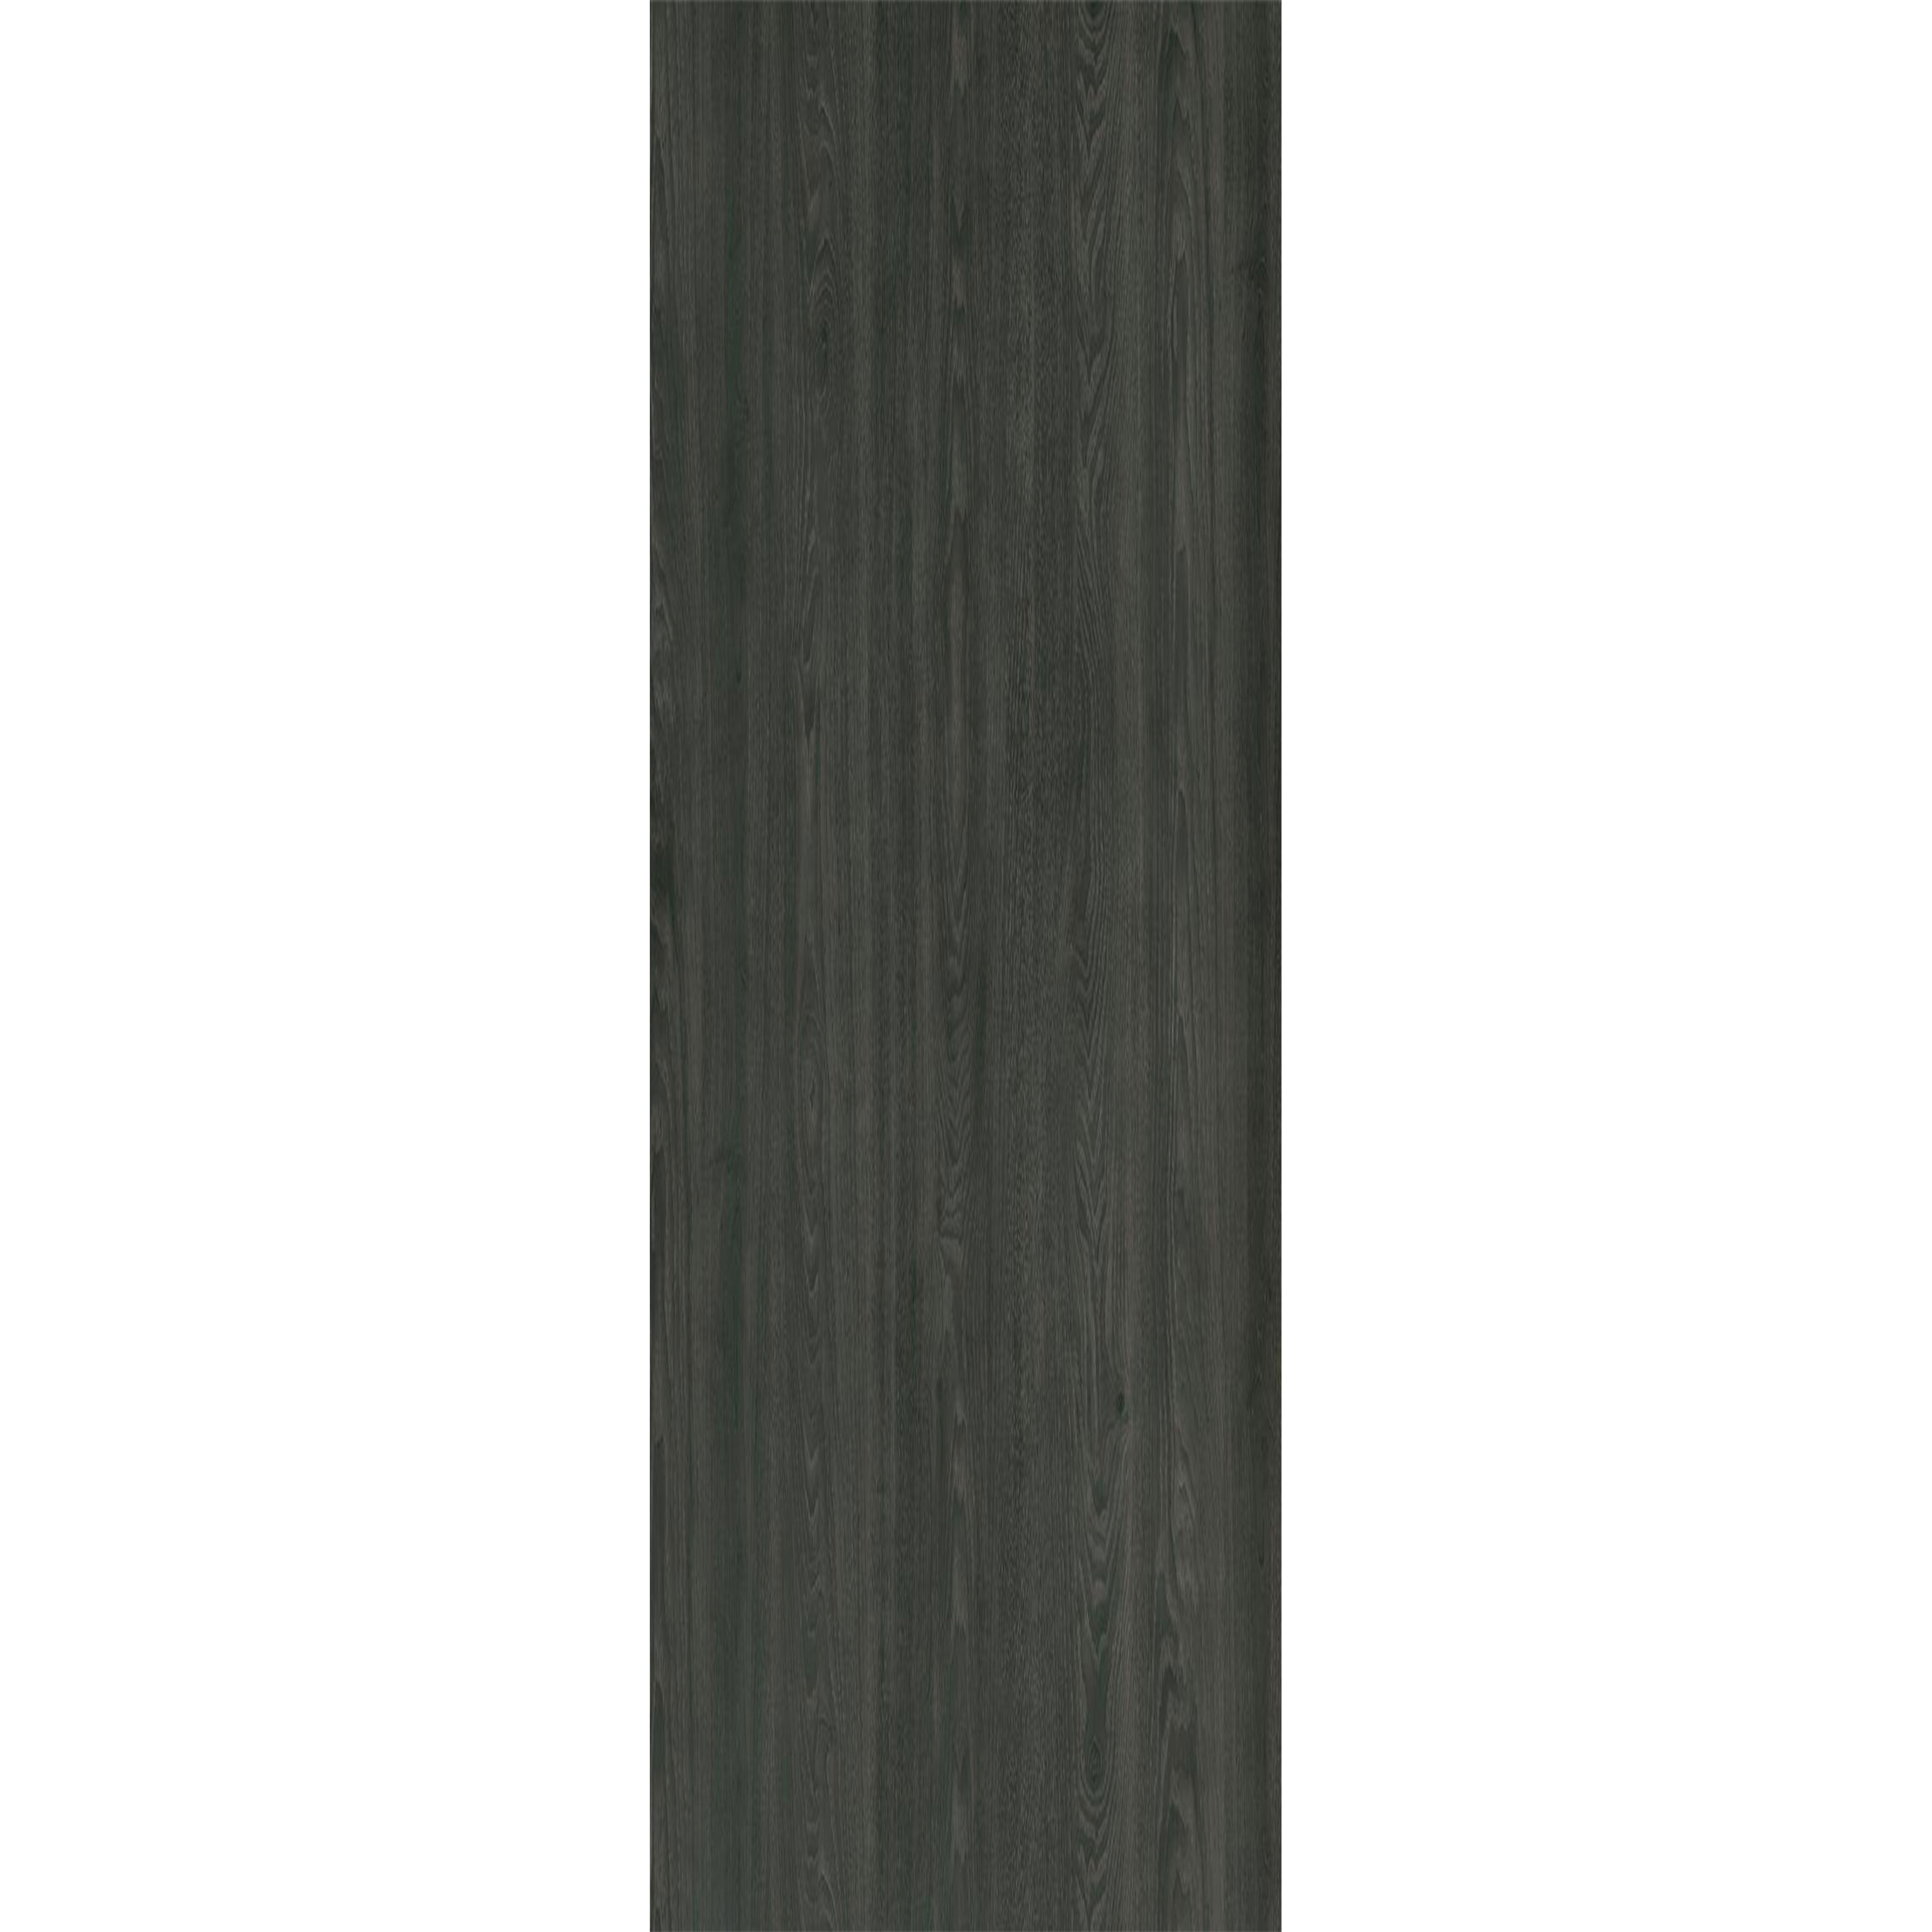 Suelo De Vinilo Sistema De Clic Blackwood Antracita 17,2x121cm